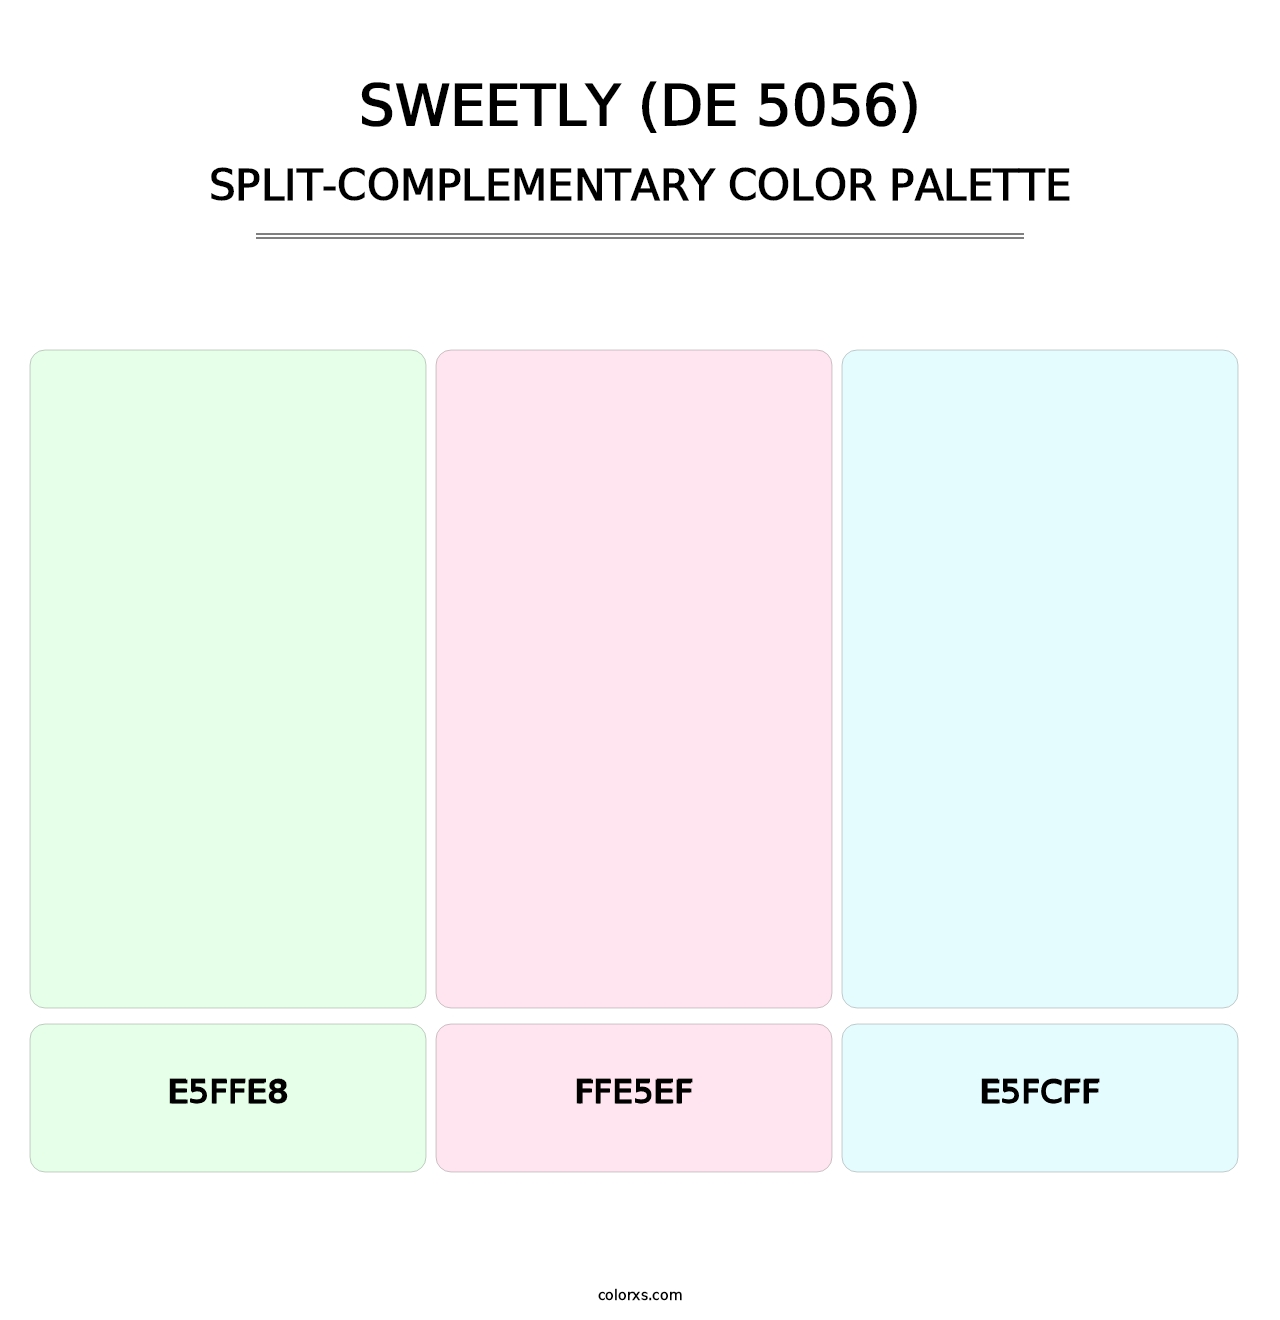 Sweetly (DE 5056) - Split-Complementary Color Palette